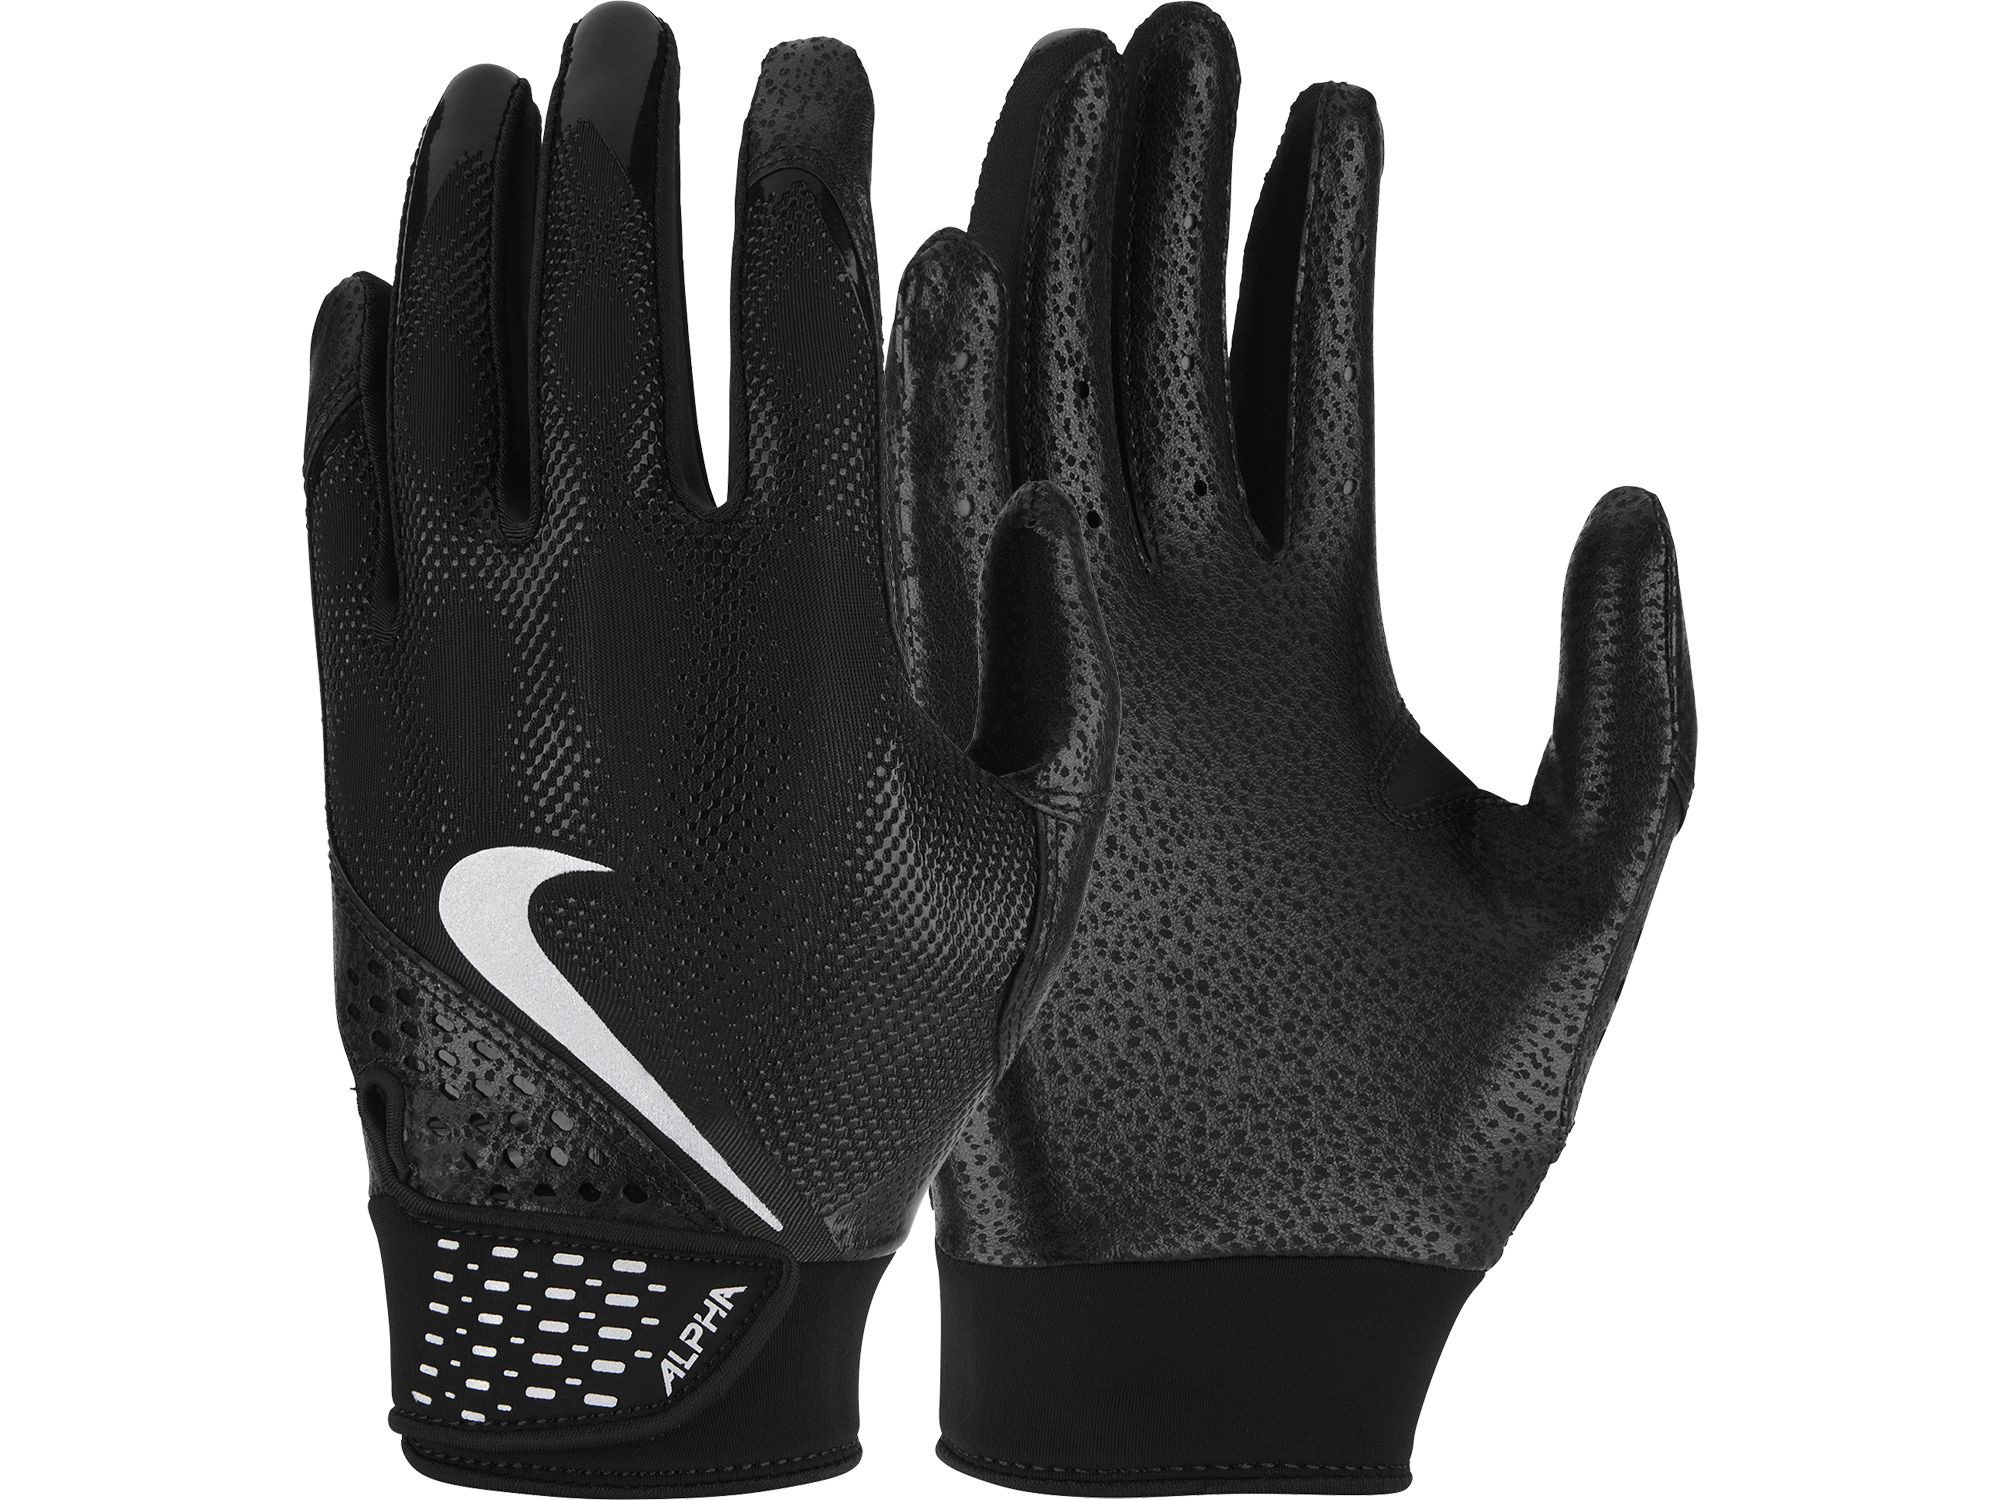 Nike Alpha Youth Batting Gloves